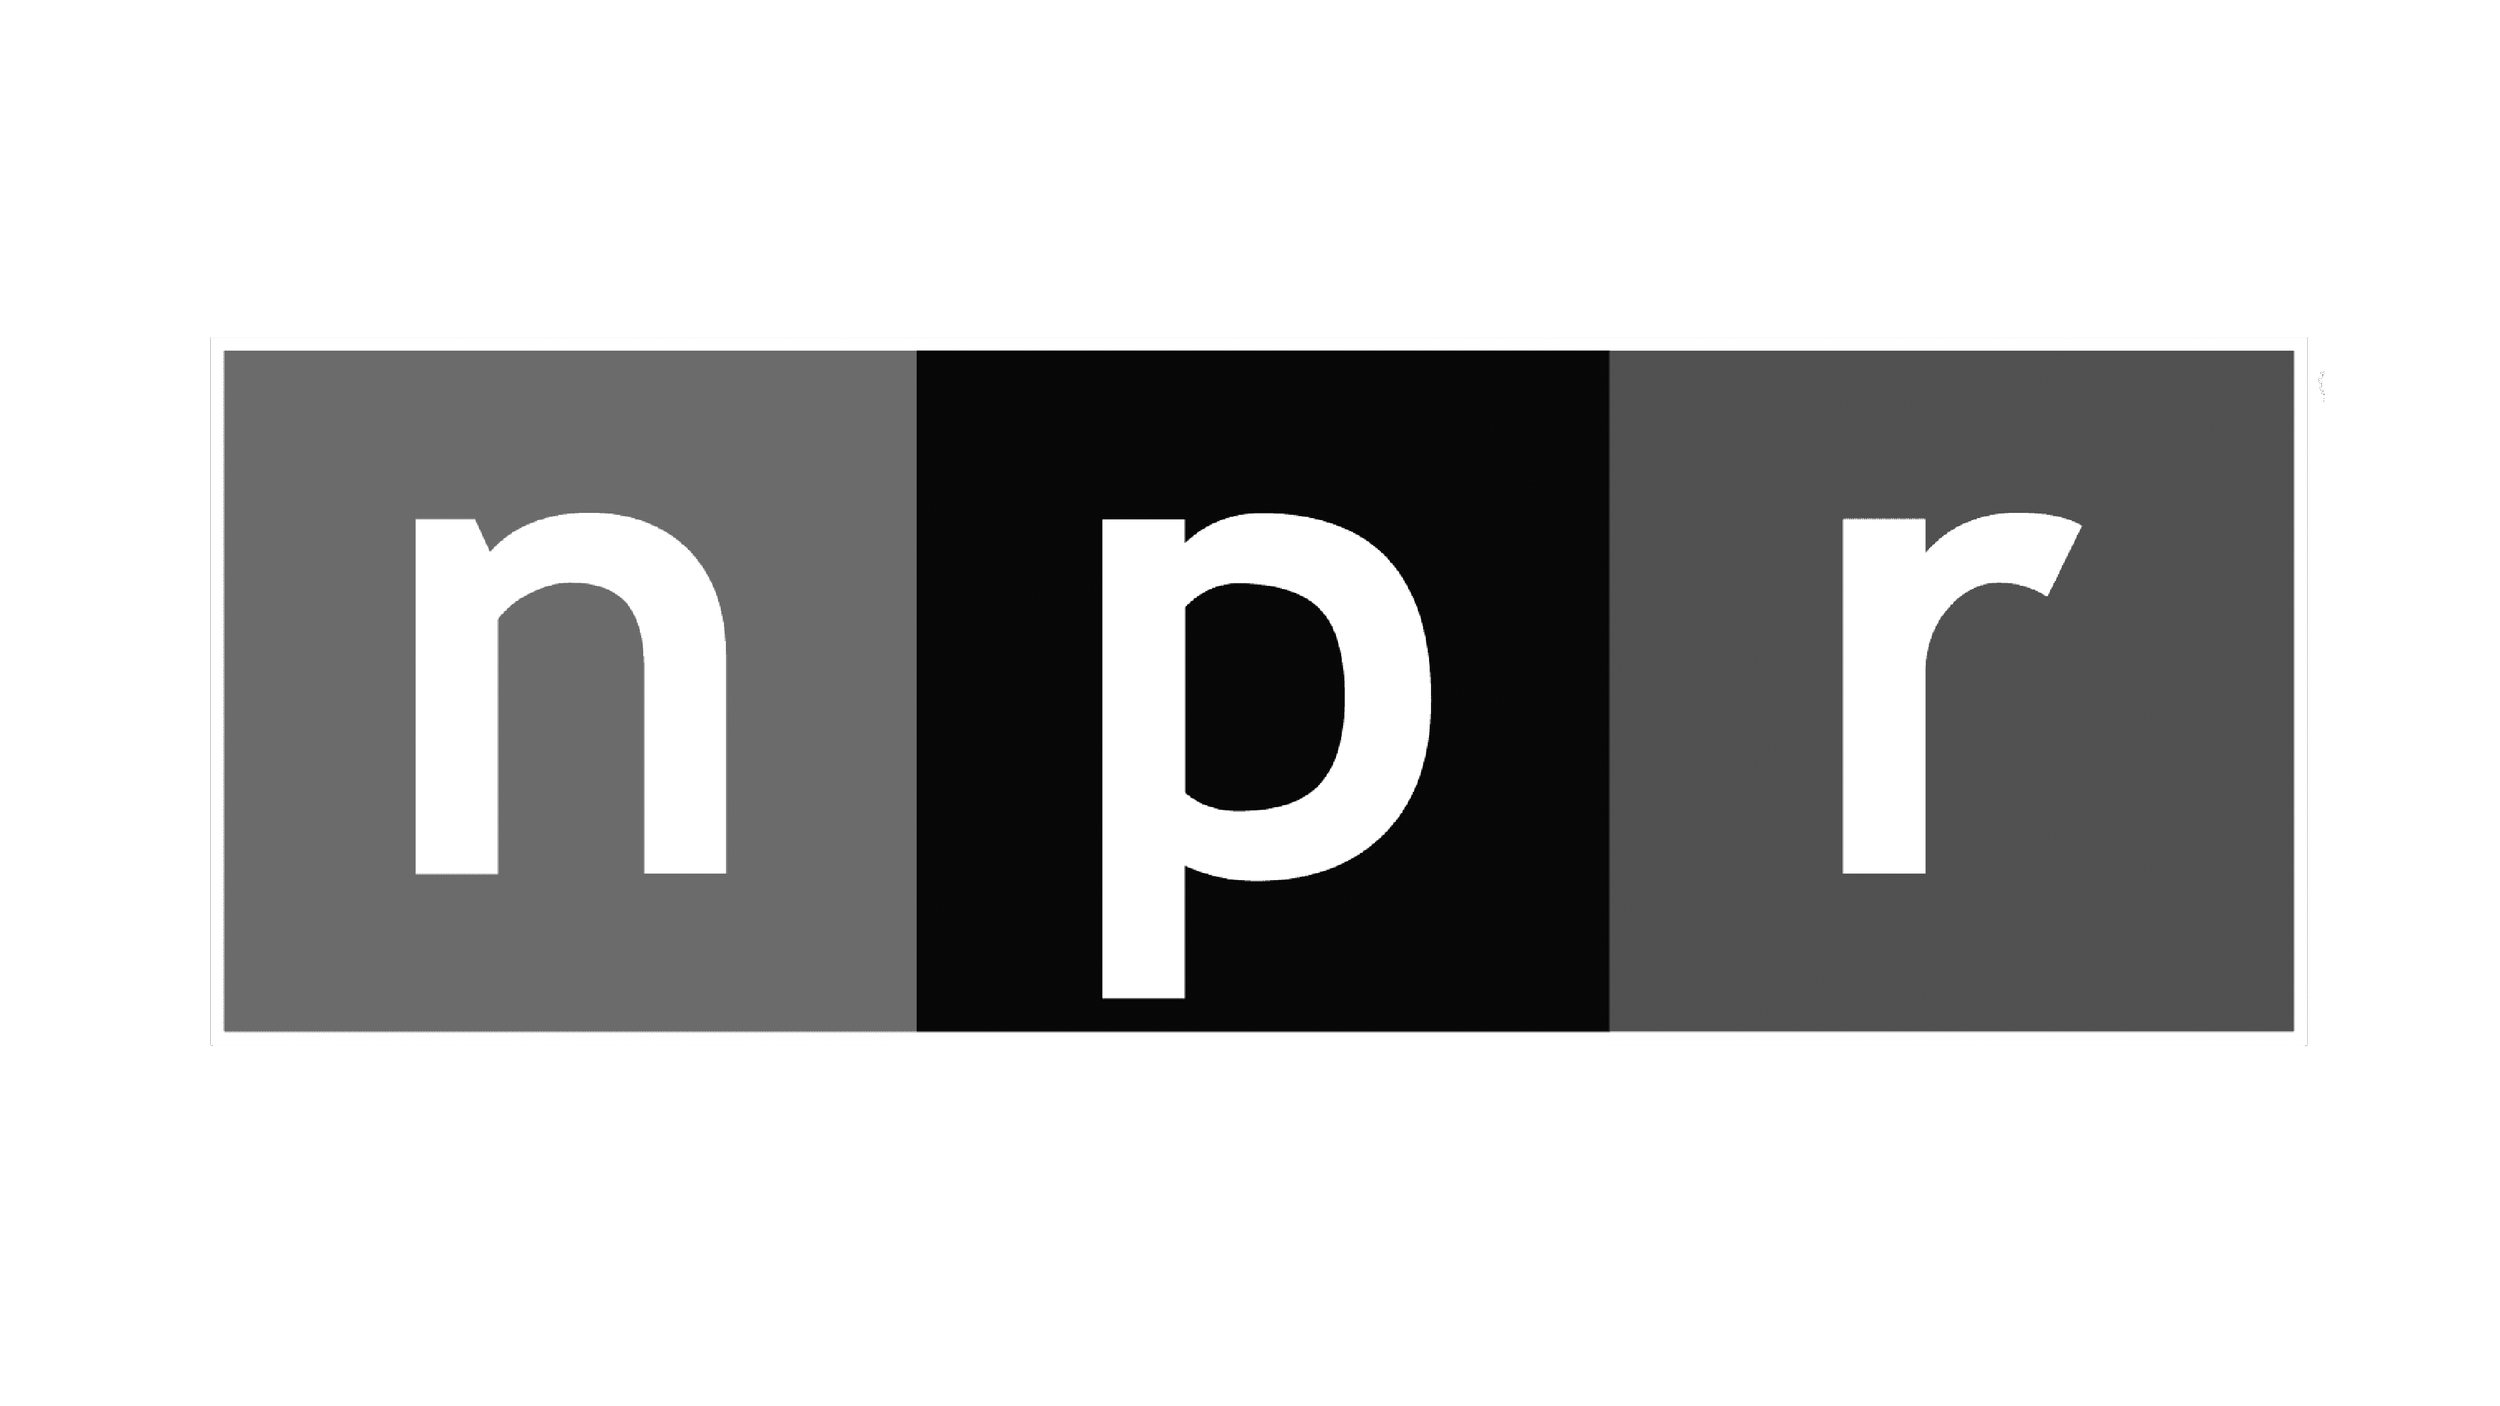 NPR-logo.png